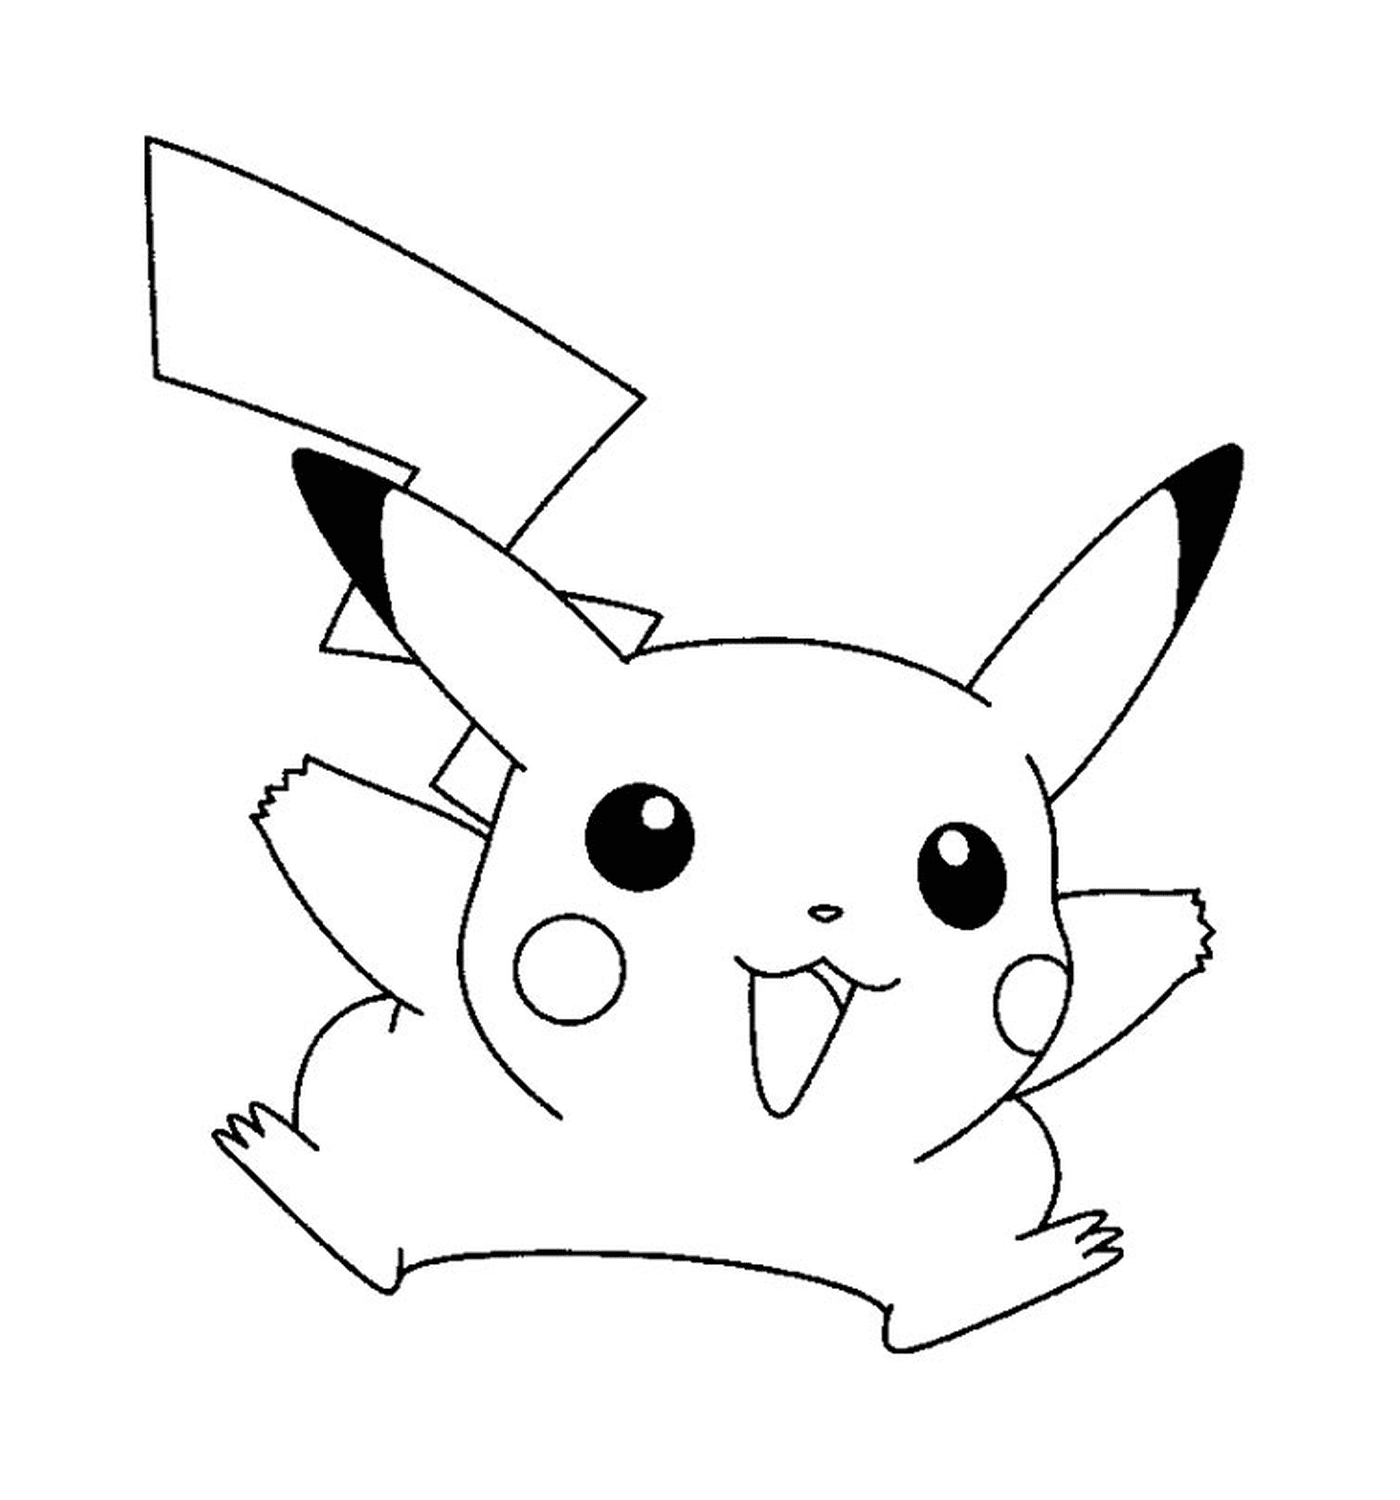  Pikachu carino e facile da disegnare 